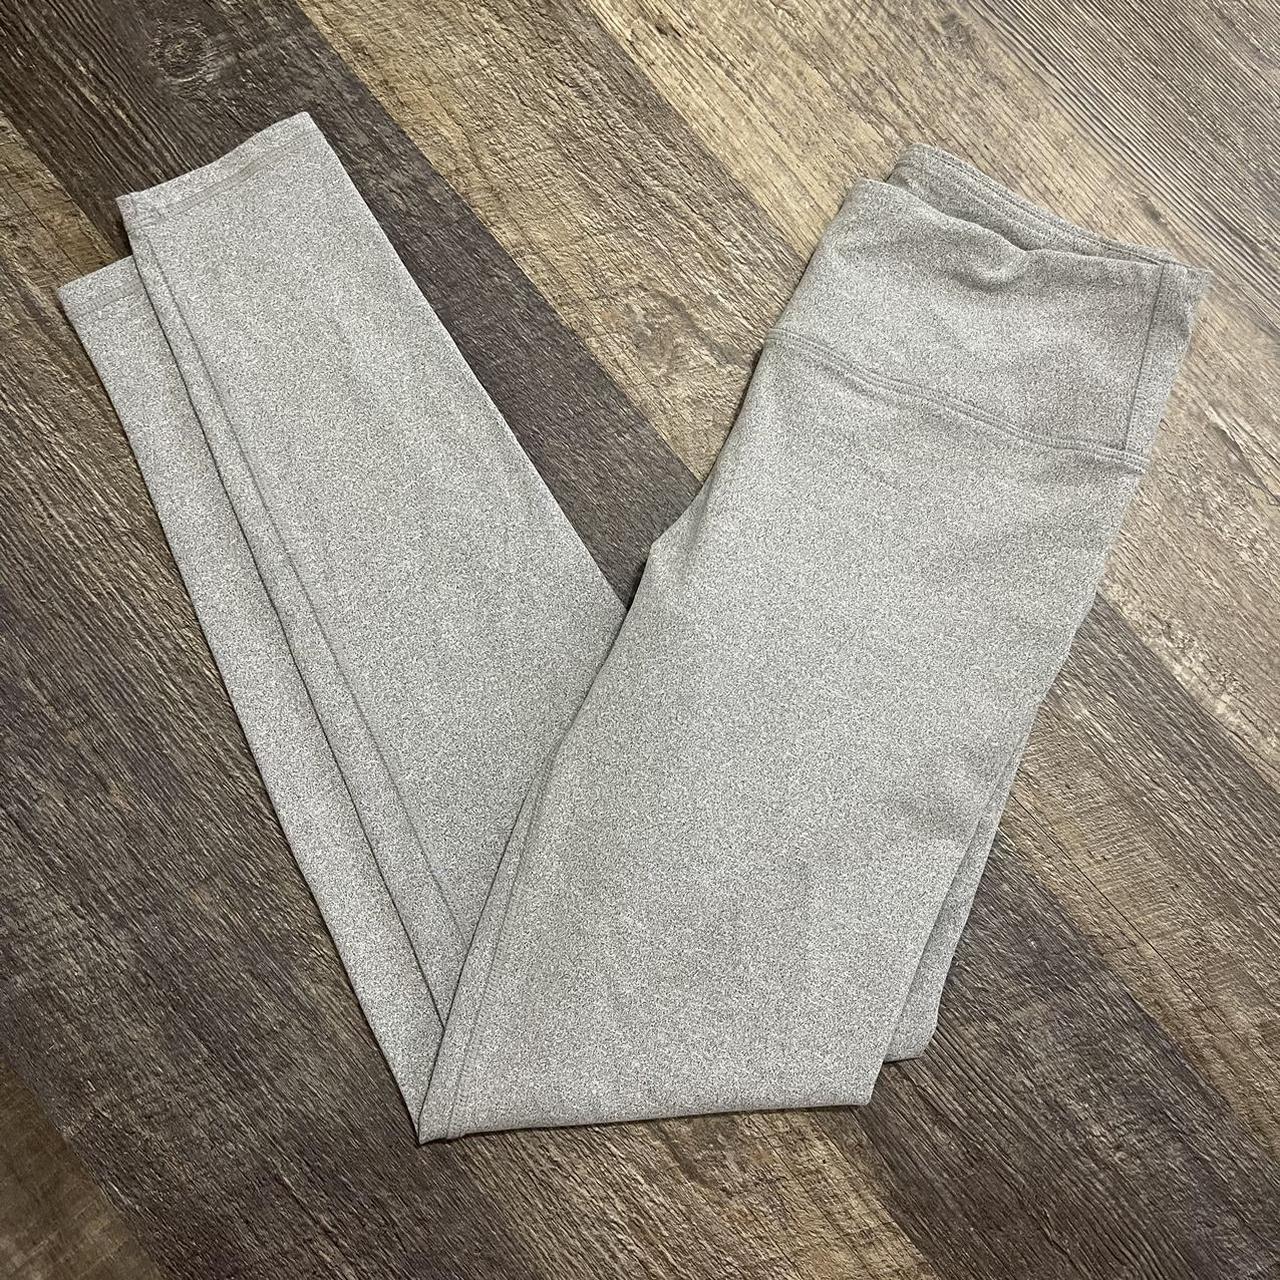 Kyodan white/gray speckled leggings, size small - Depop